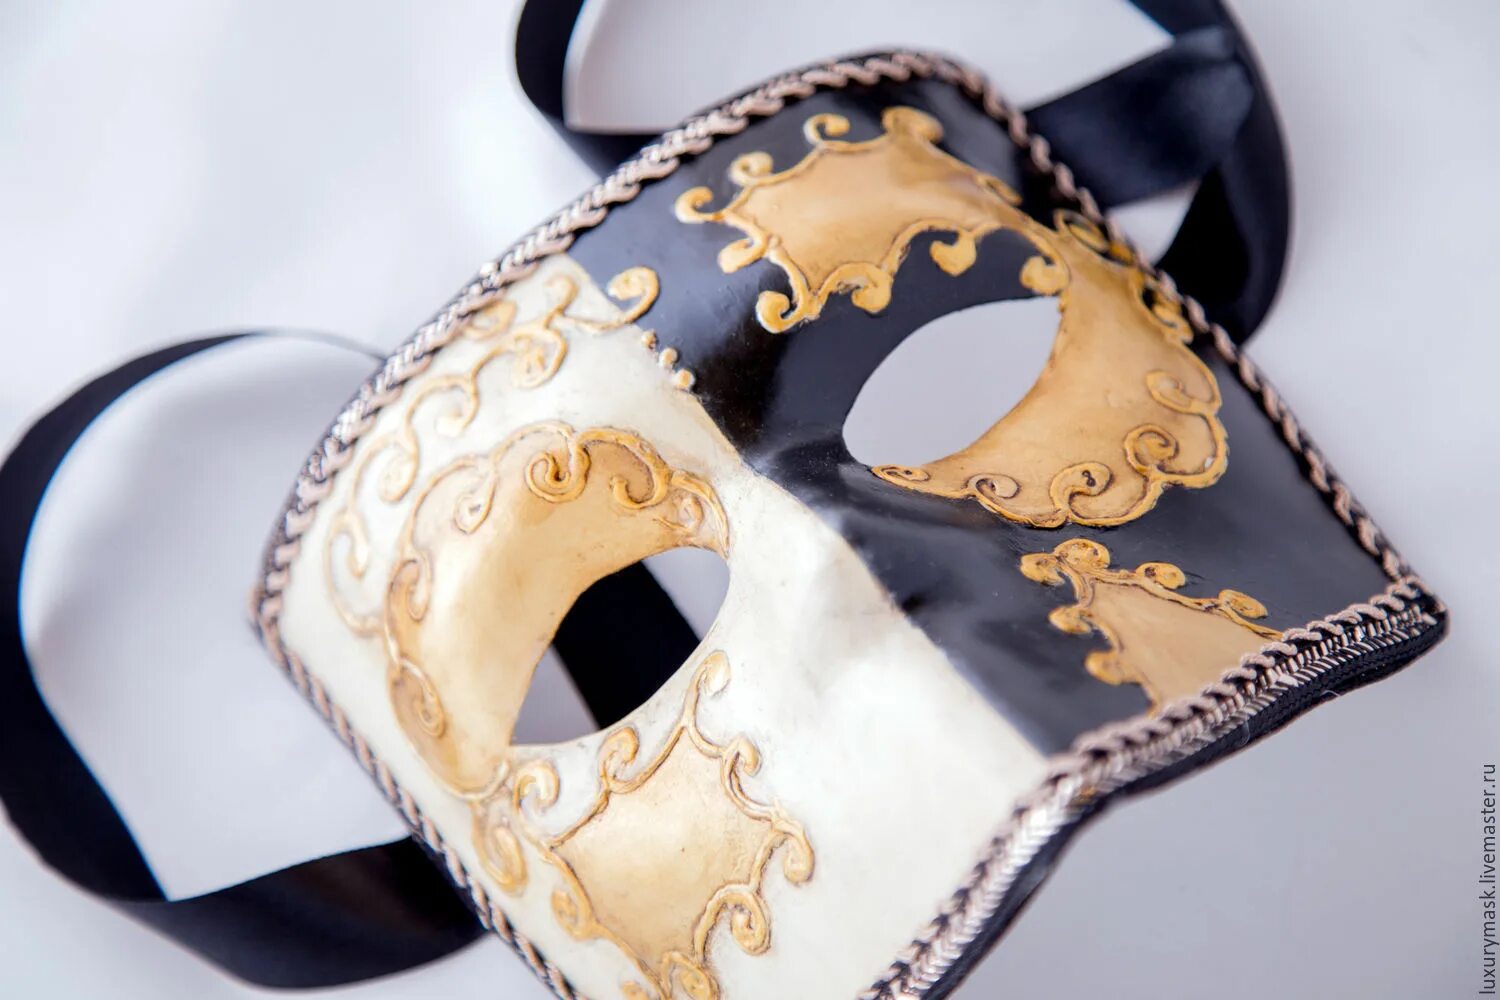 Венецианская маска Баута. Венецианский карнавал Баута. Венецианский карнавал маска Баута. Маска Баута классическая.